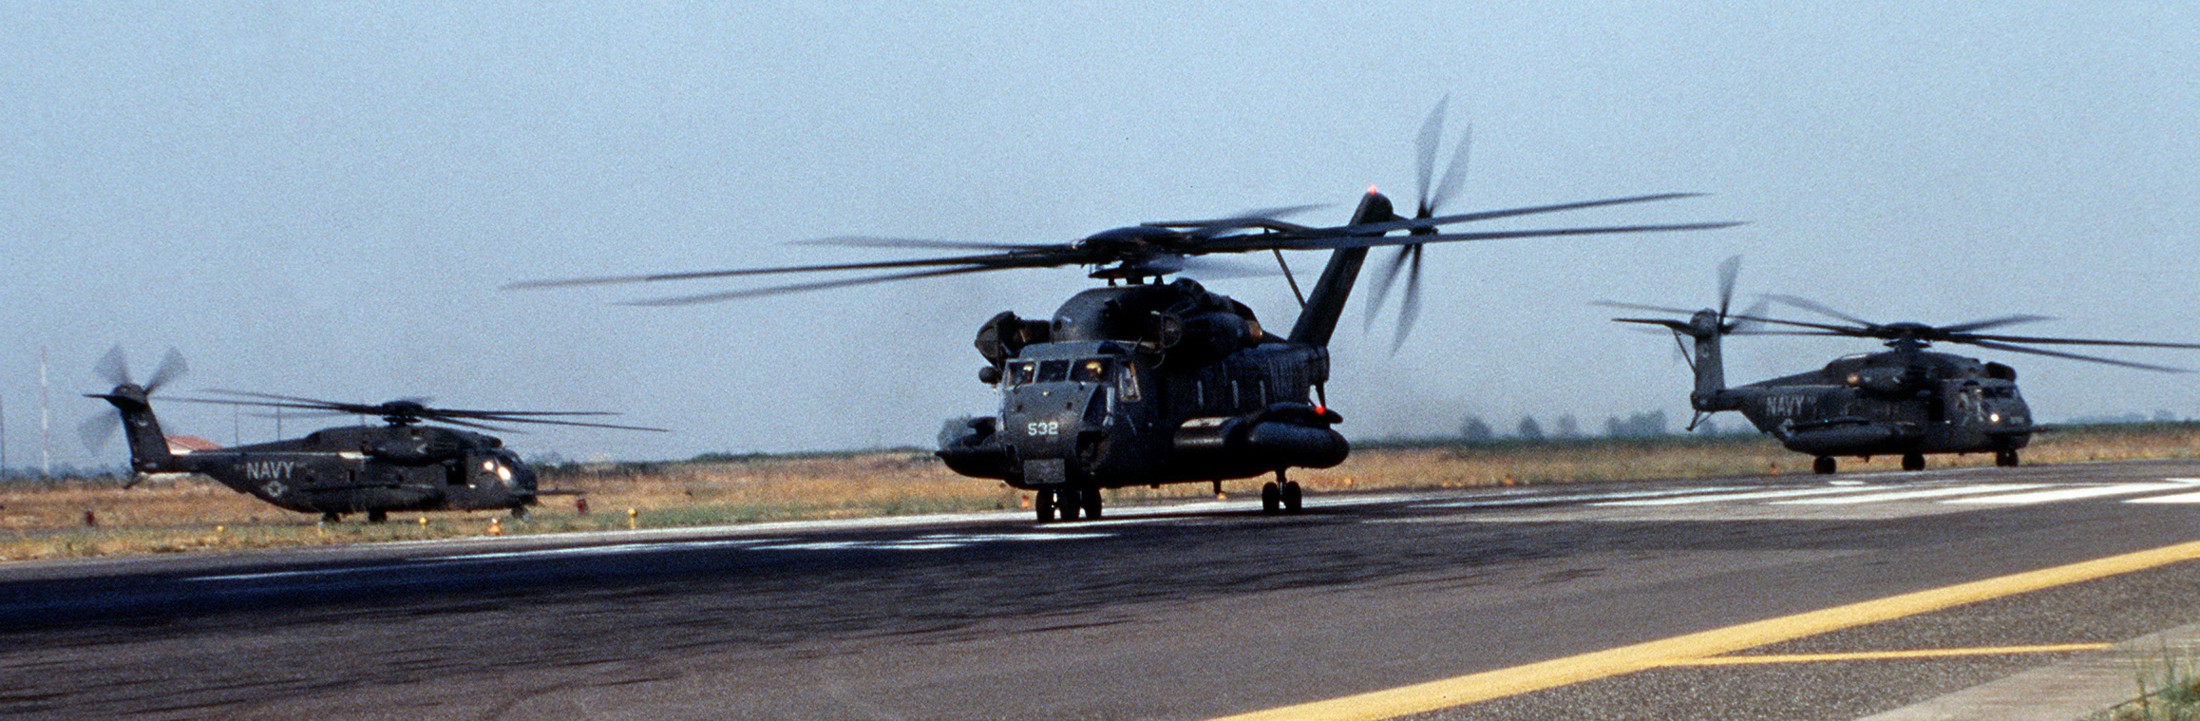 hc-4 black stallions helicopter combat support squadron ch-53e super stallion 35